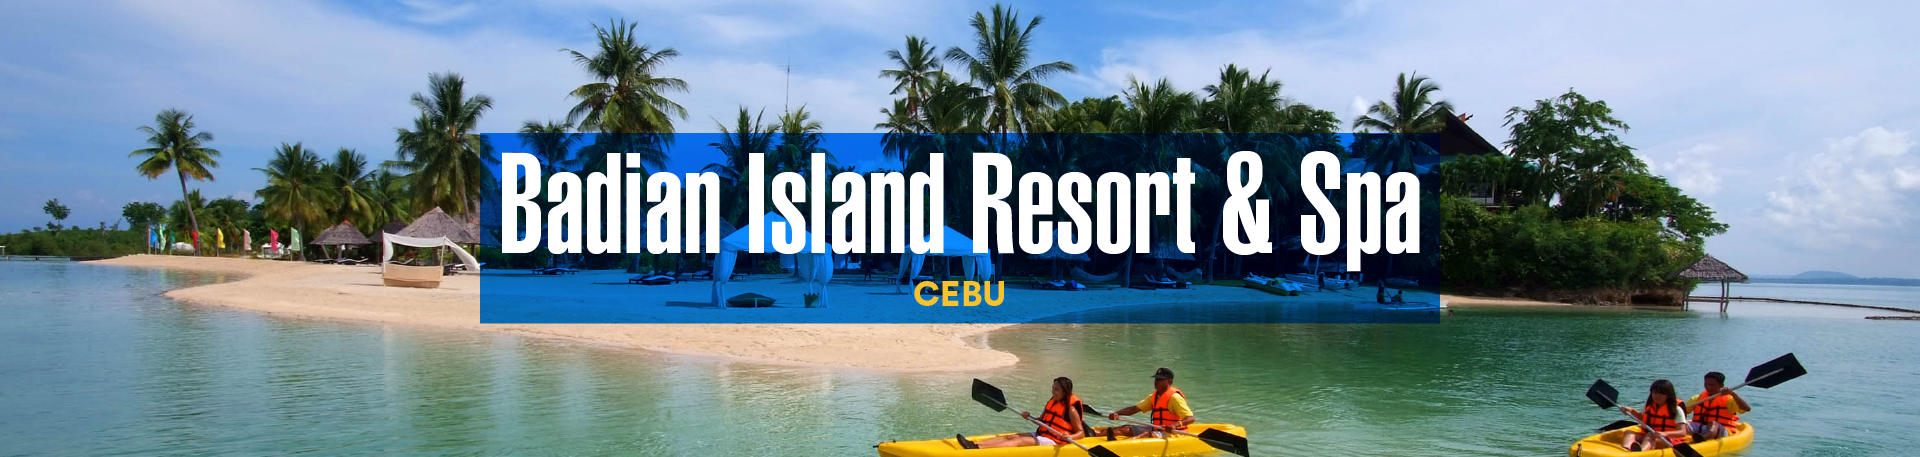 Badian Island Resort & Spa, Cebu